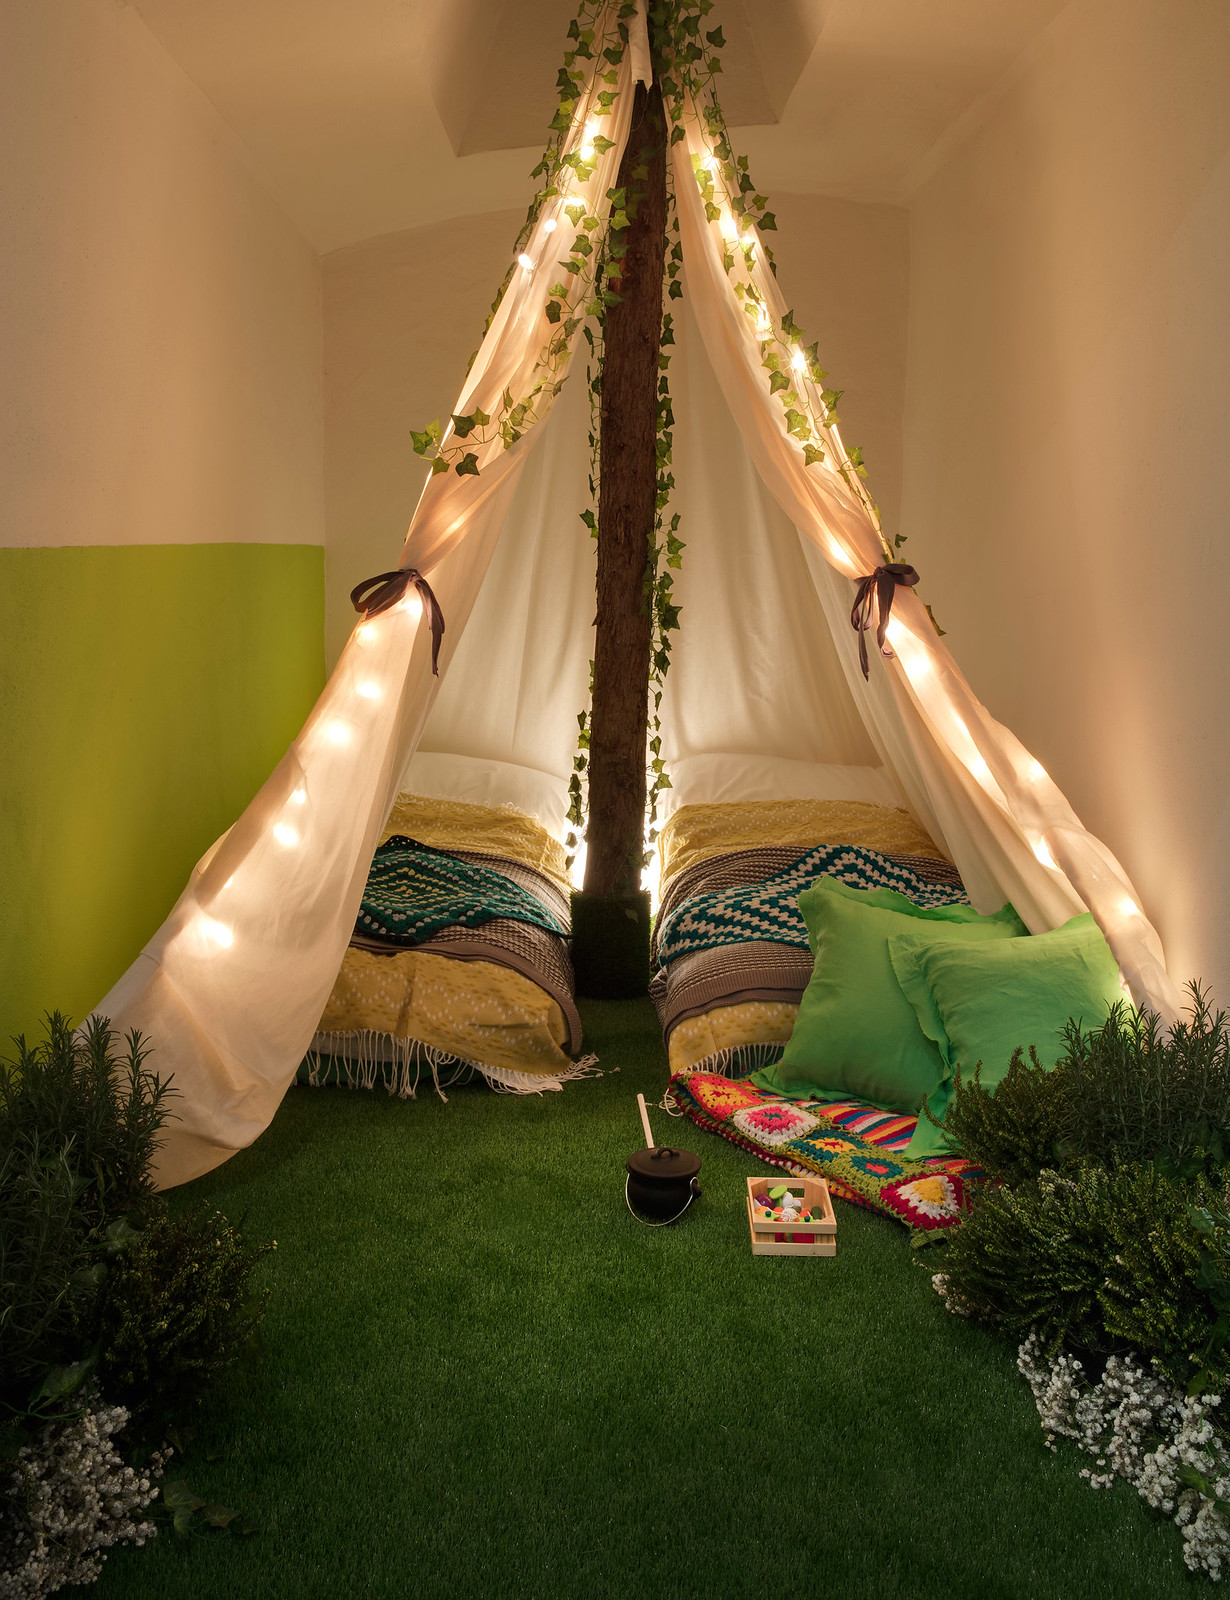 greenery-apartment-installation-airbnb-pantone-design_dezeen_2364_col_9